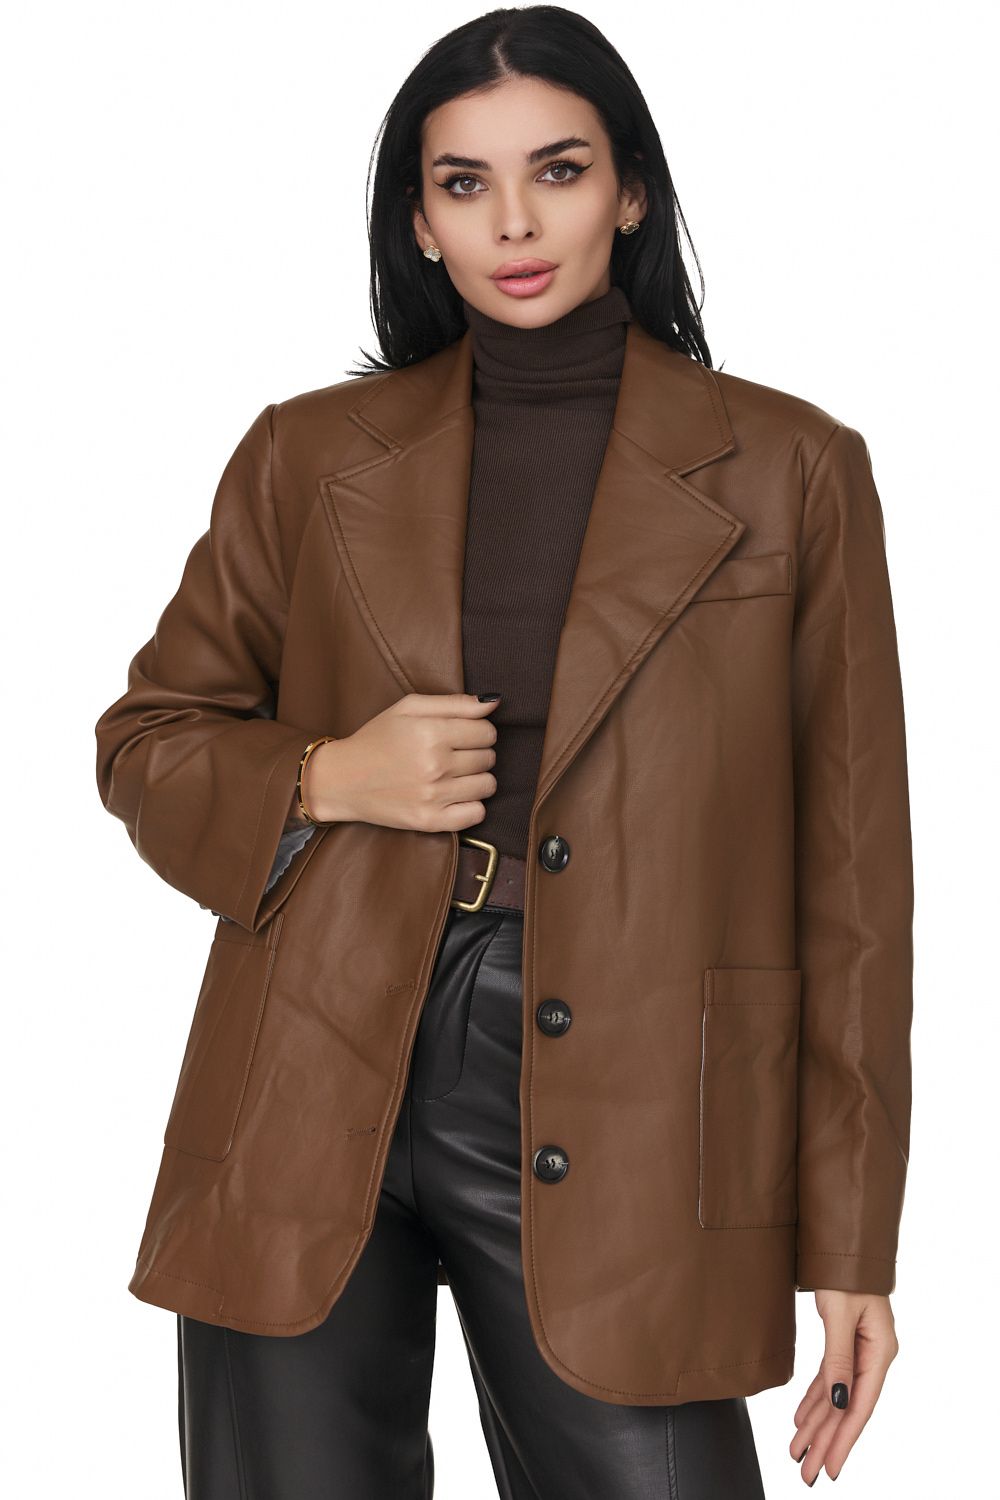 Elegant brown ladies jacket Tivafe Bogas